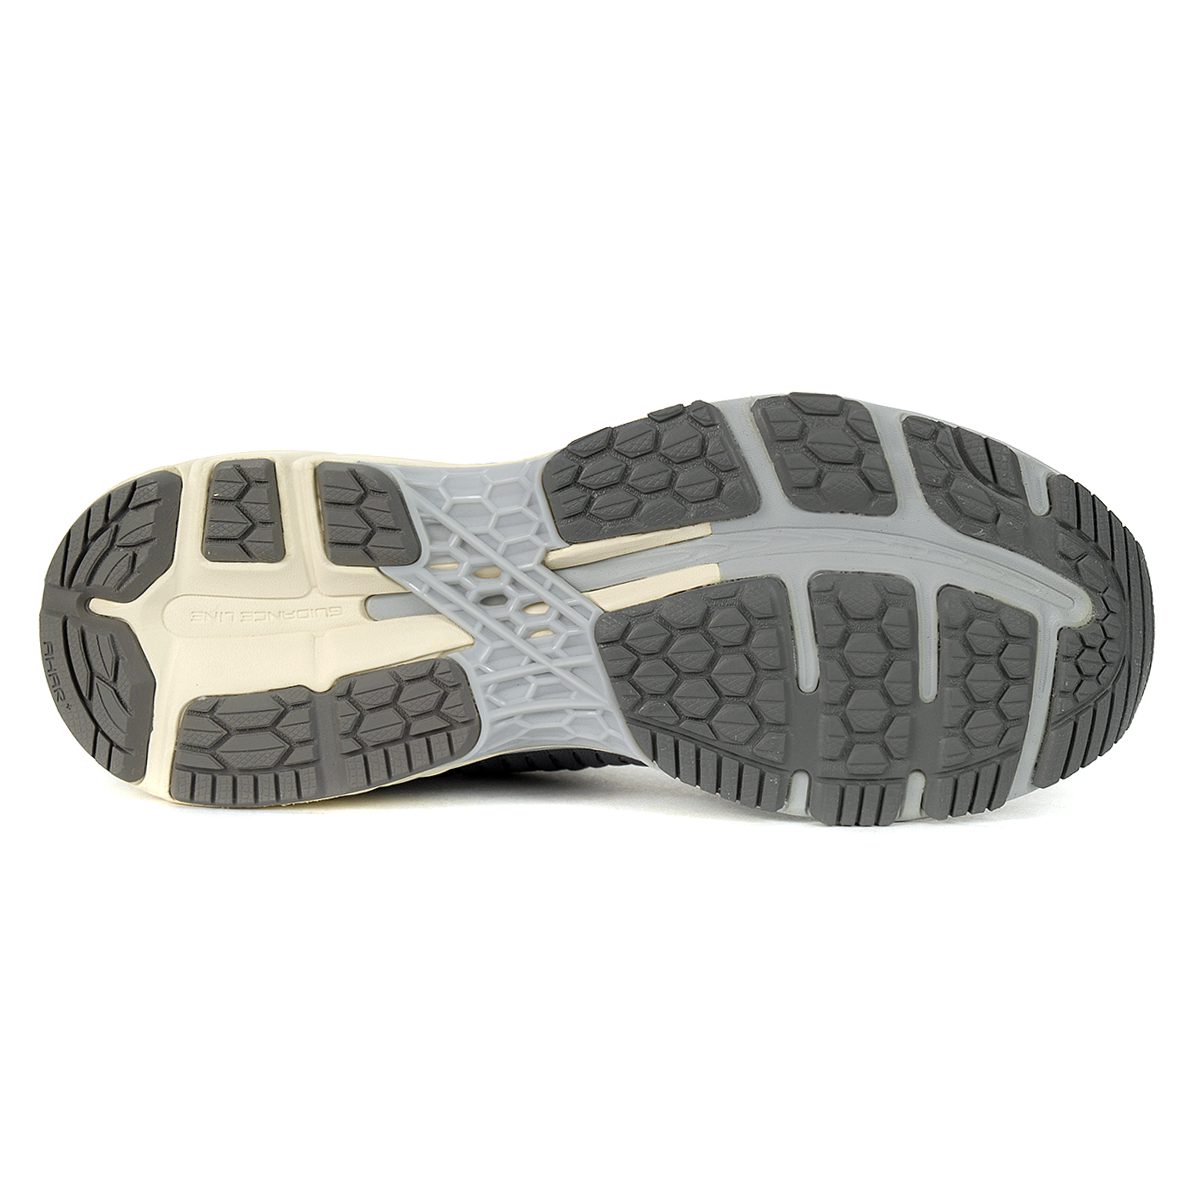 ASICS Women's Gel-Kayano 25 (Narrow) Carbon/Mid Grey Running Shoes ...